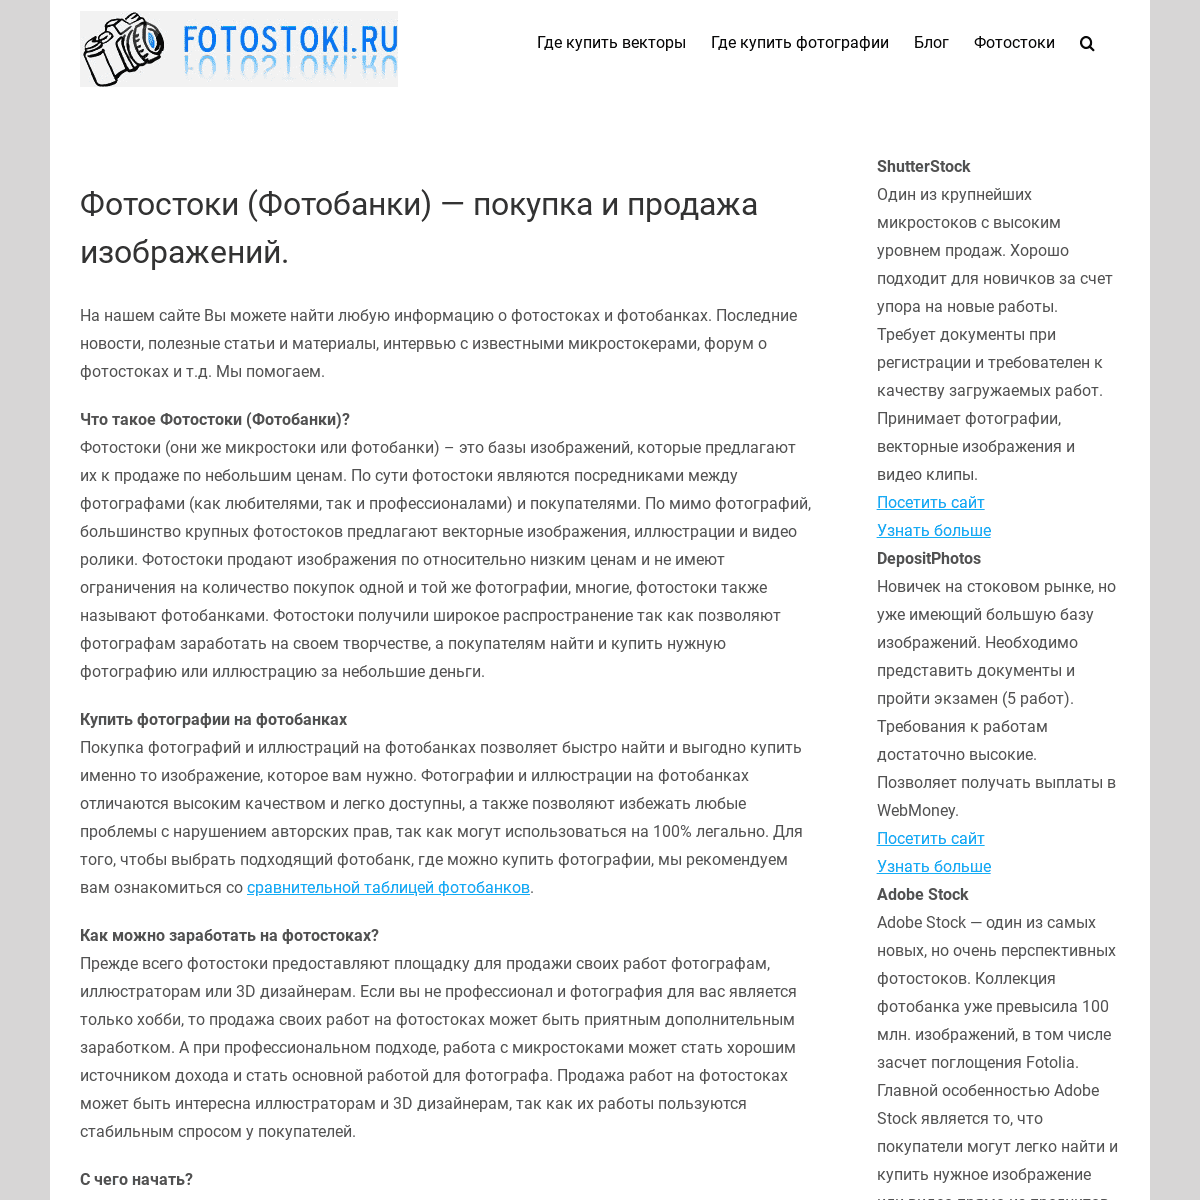 A complete backup of fotostoki.ru